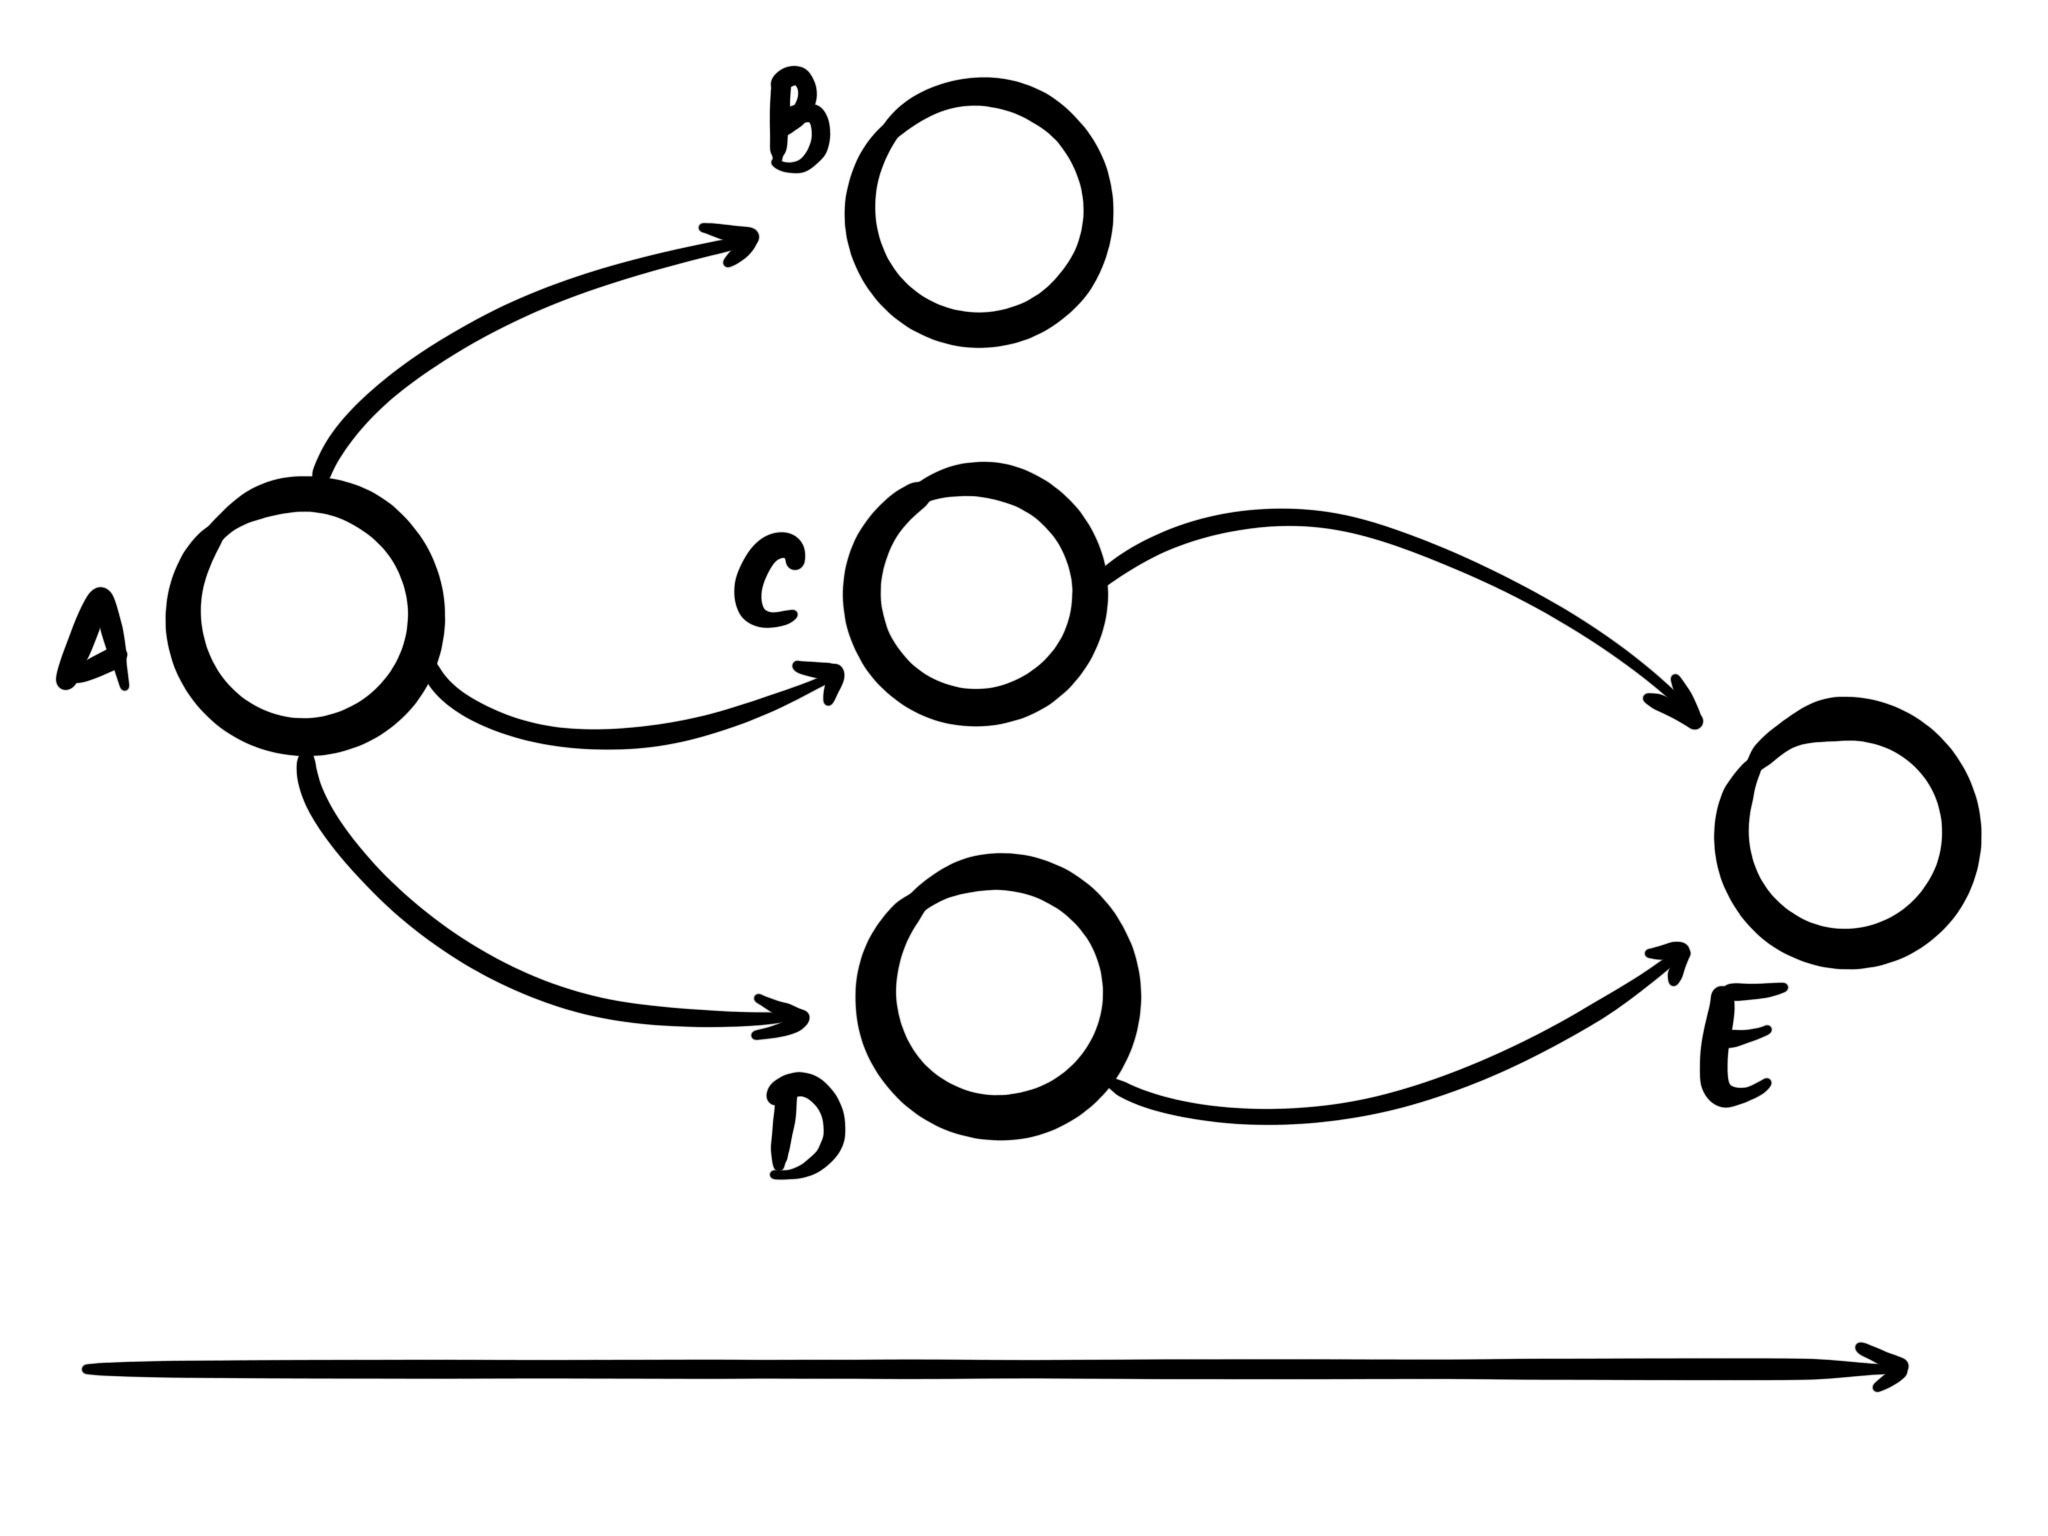 acyclic graph